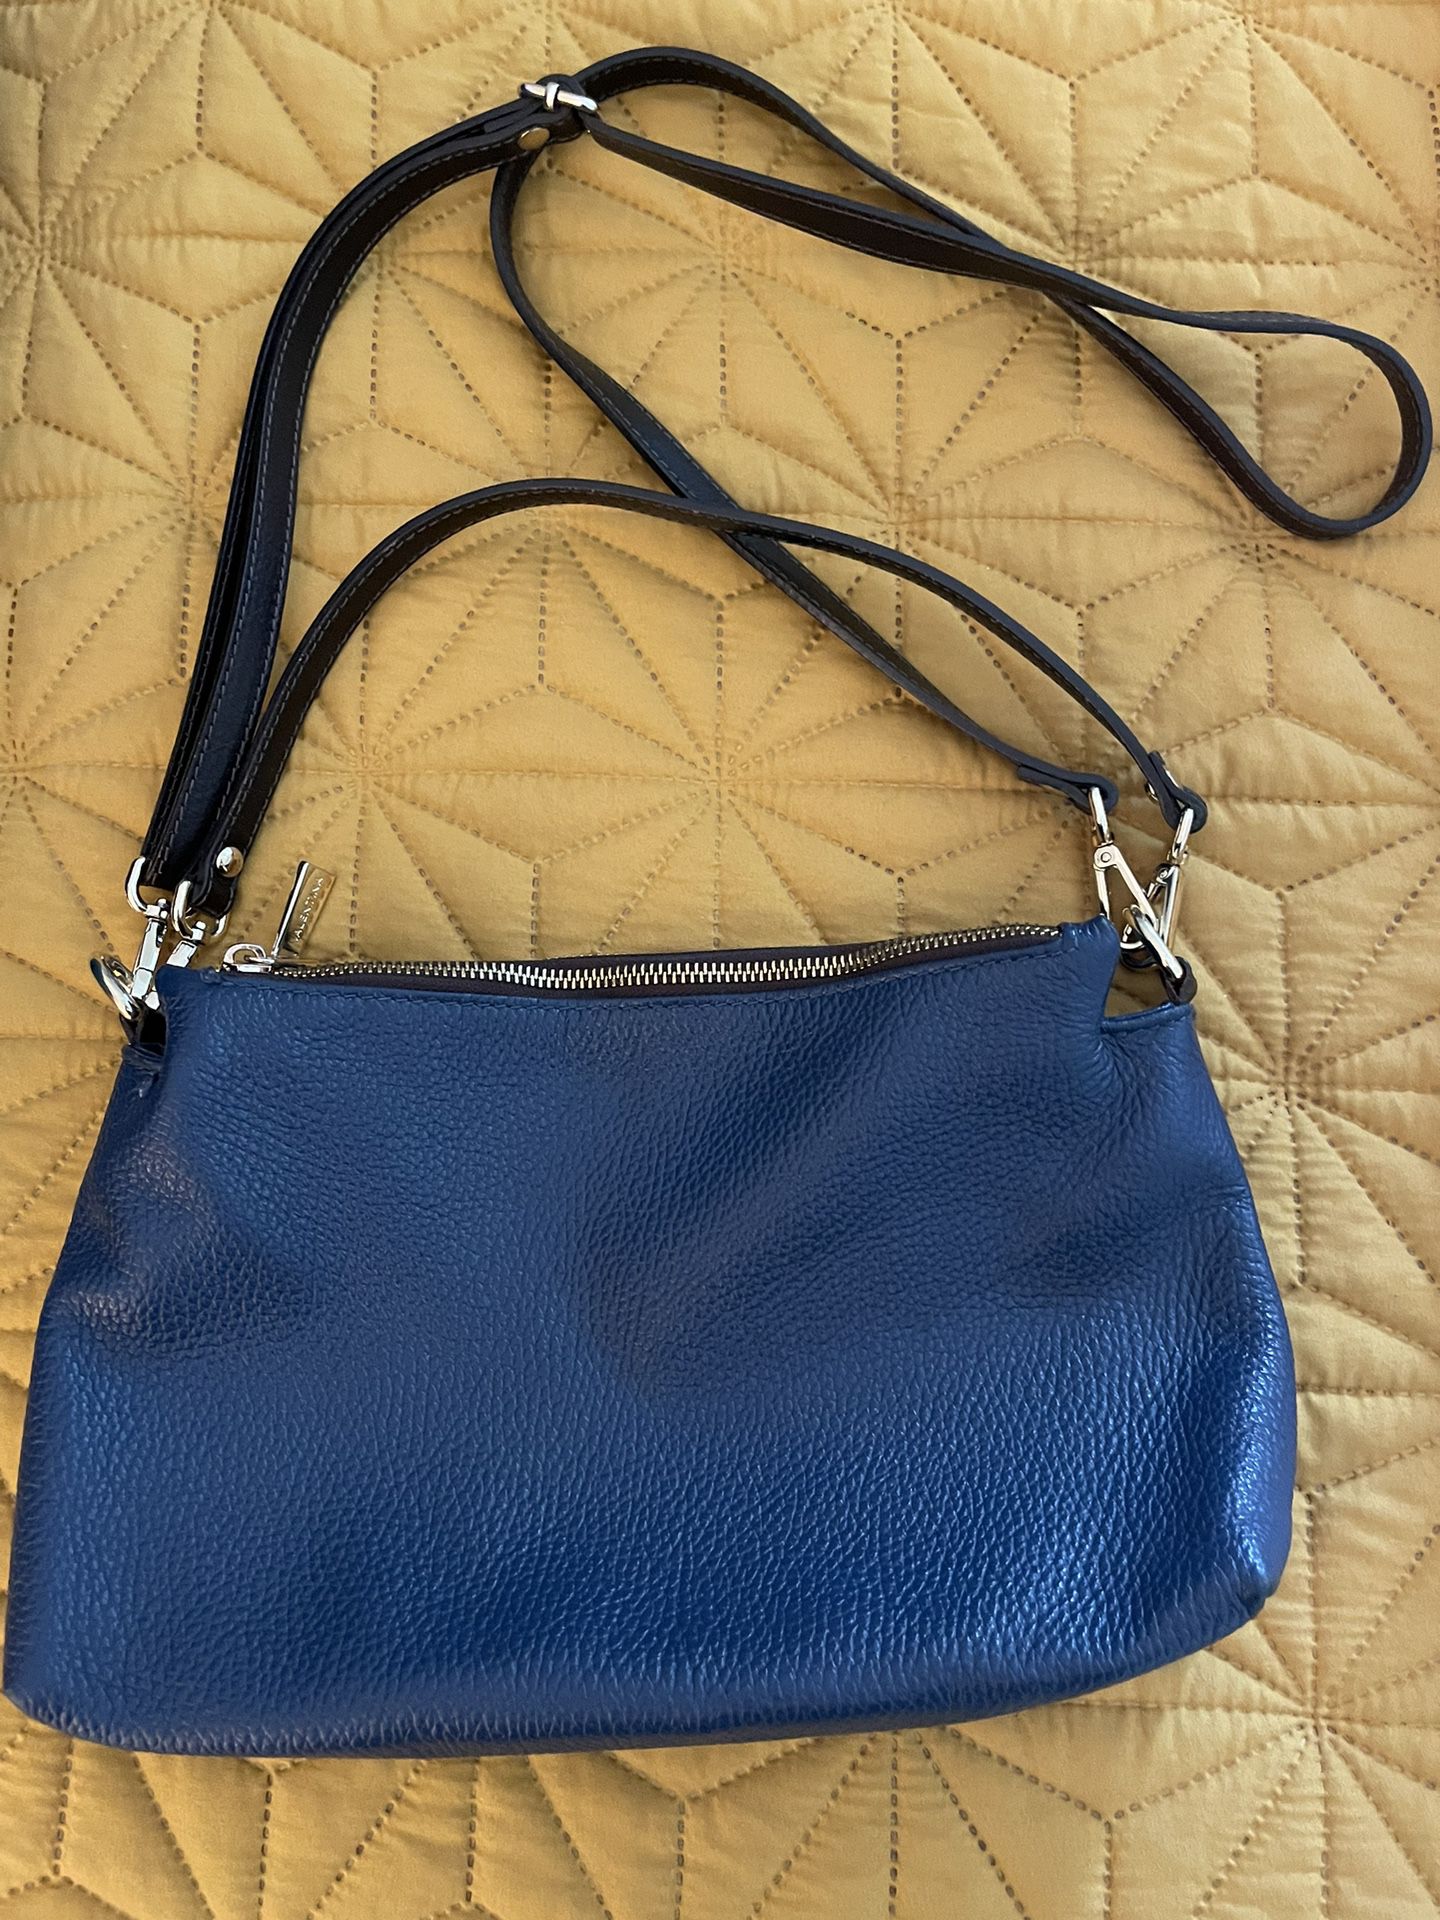 Hand Bag Purse - Valentina Blue Leather Hand Bag 